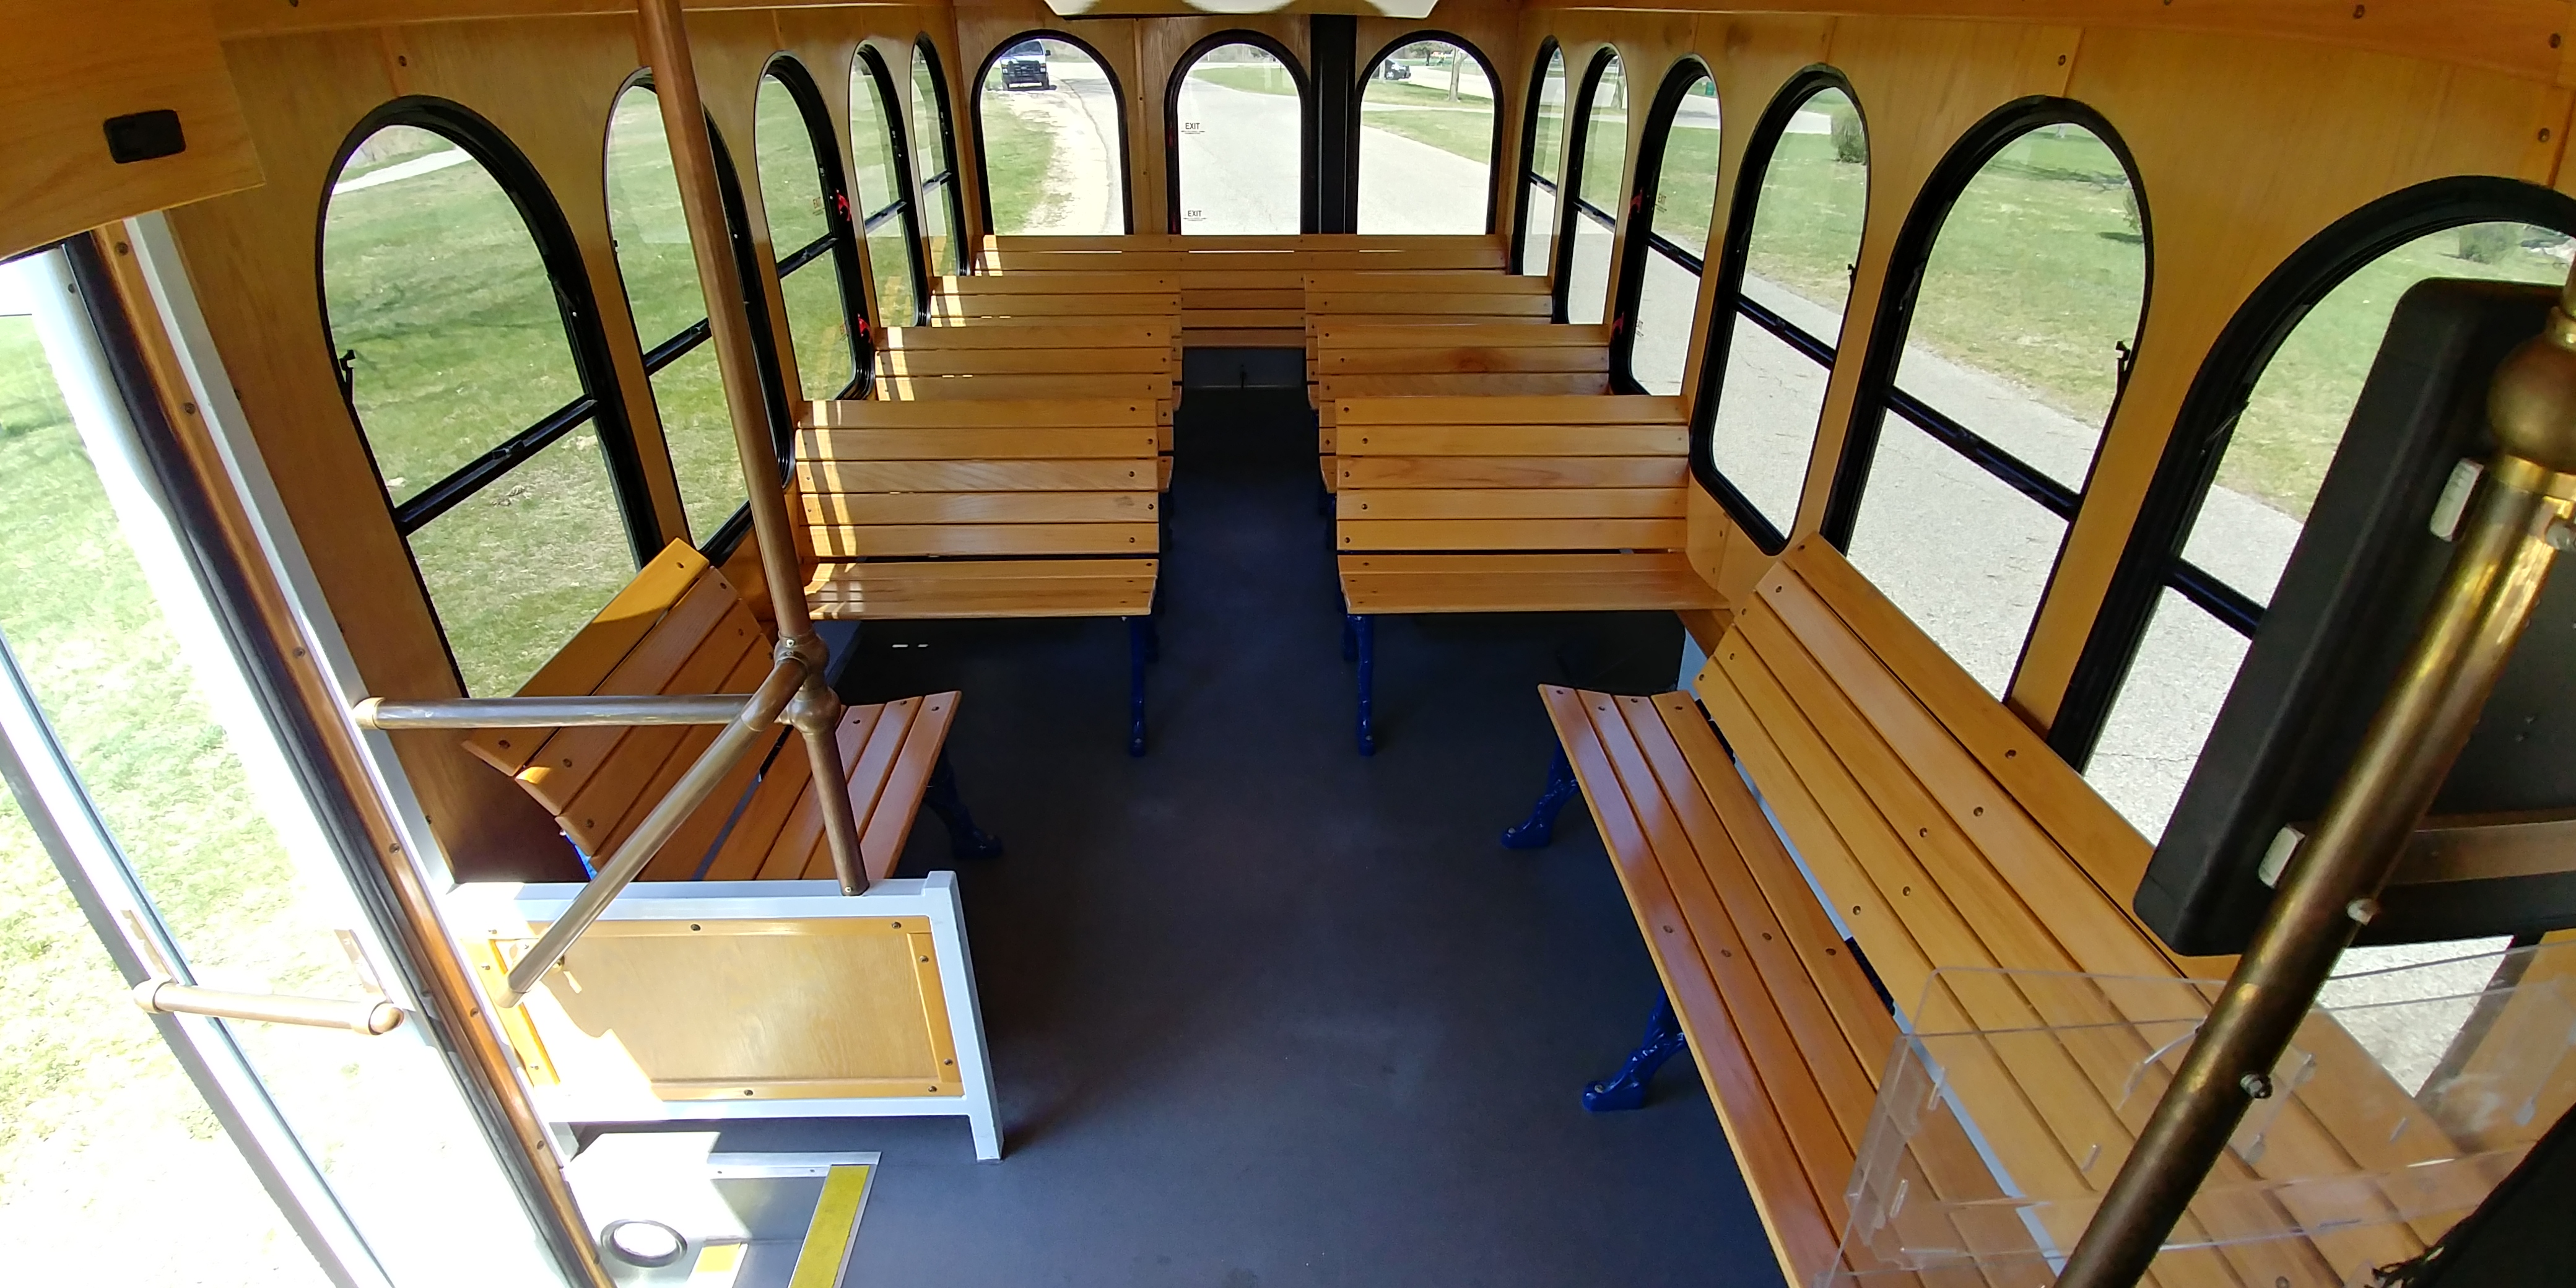 24 Passenger Trolley Interior